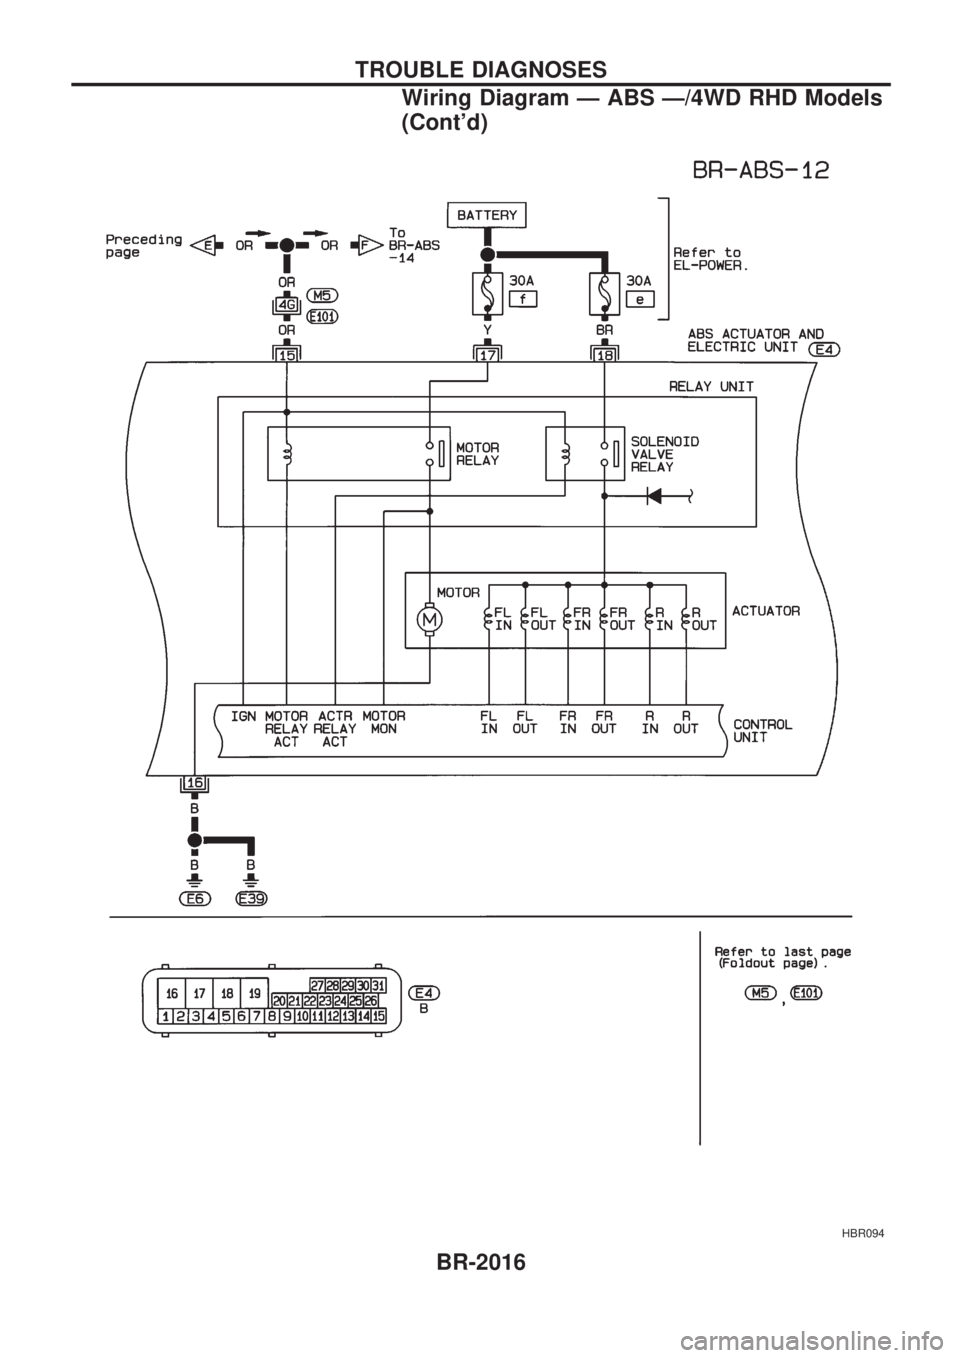 NISSAN PICK-UP 1999  Repair Manual HBR094
TROUBLE DIAGNOSES
Wiring Diagram Ð ABS Ð/4WD RHD Models
(Contd)
BR-2016 